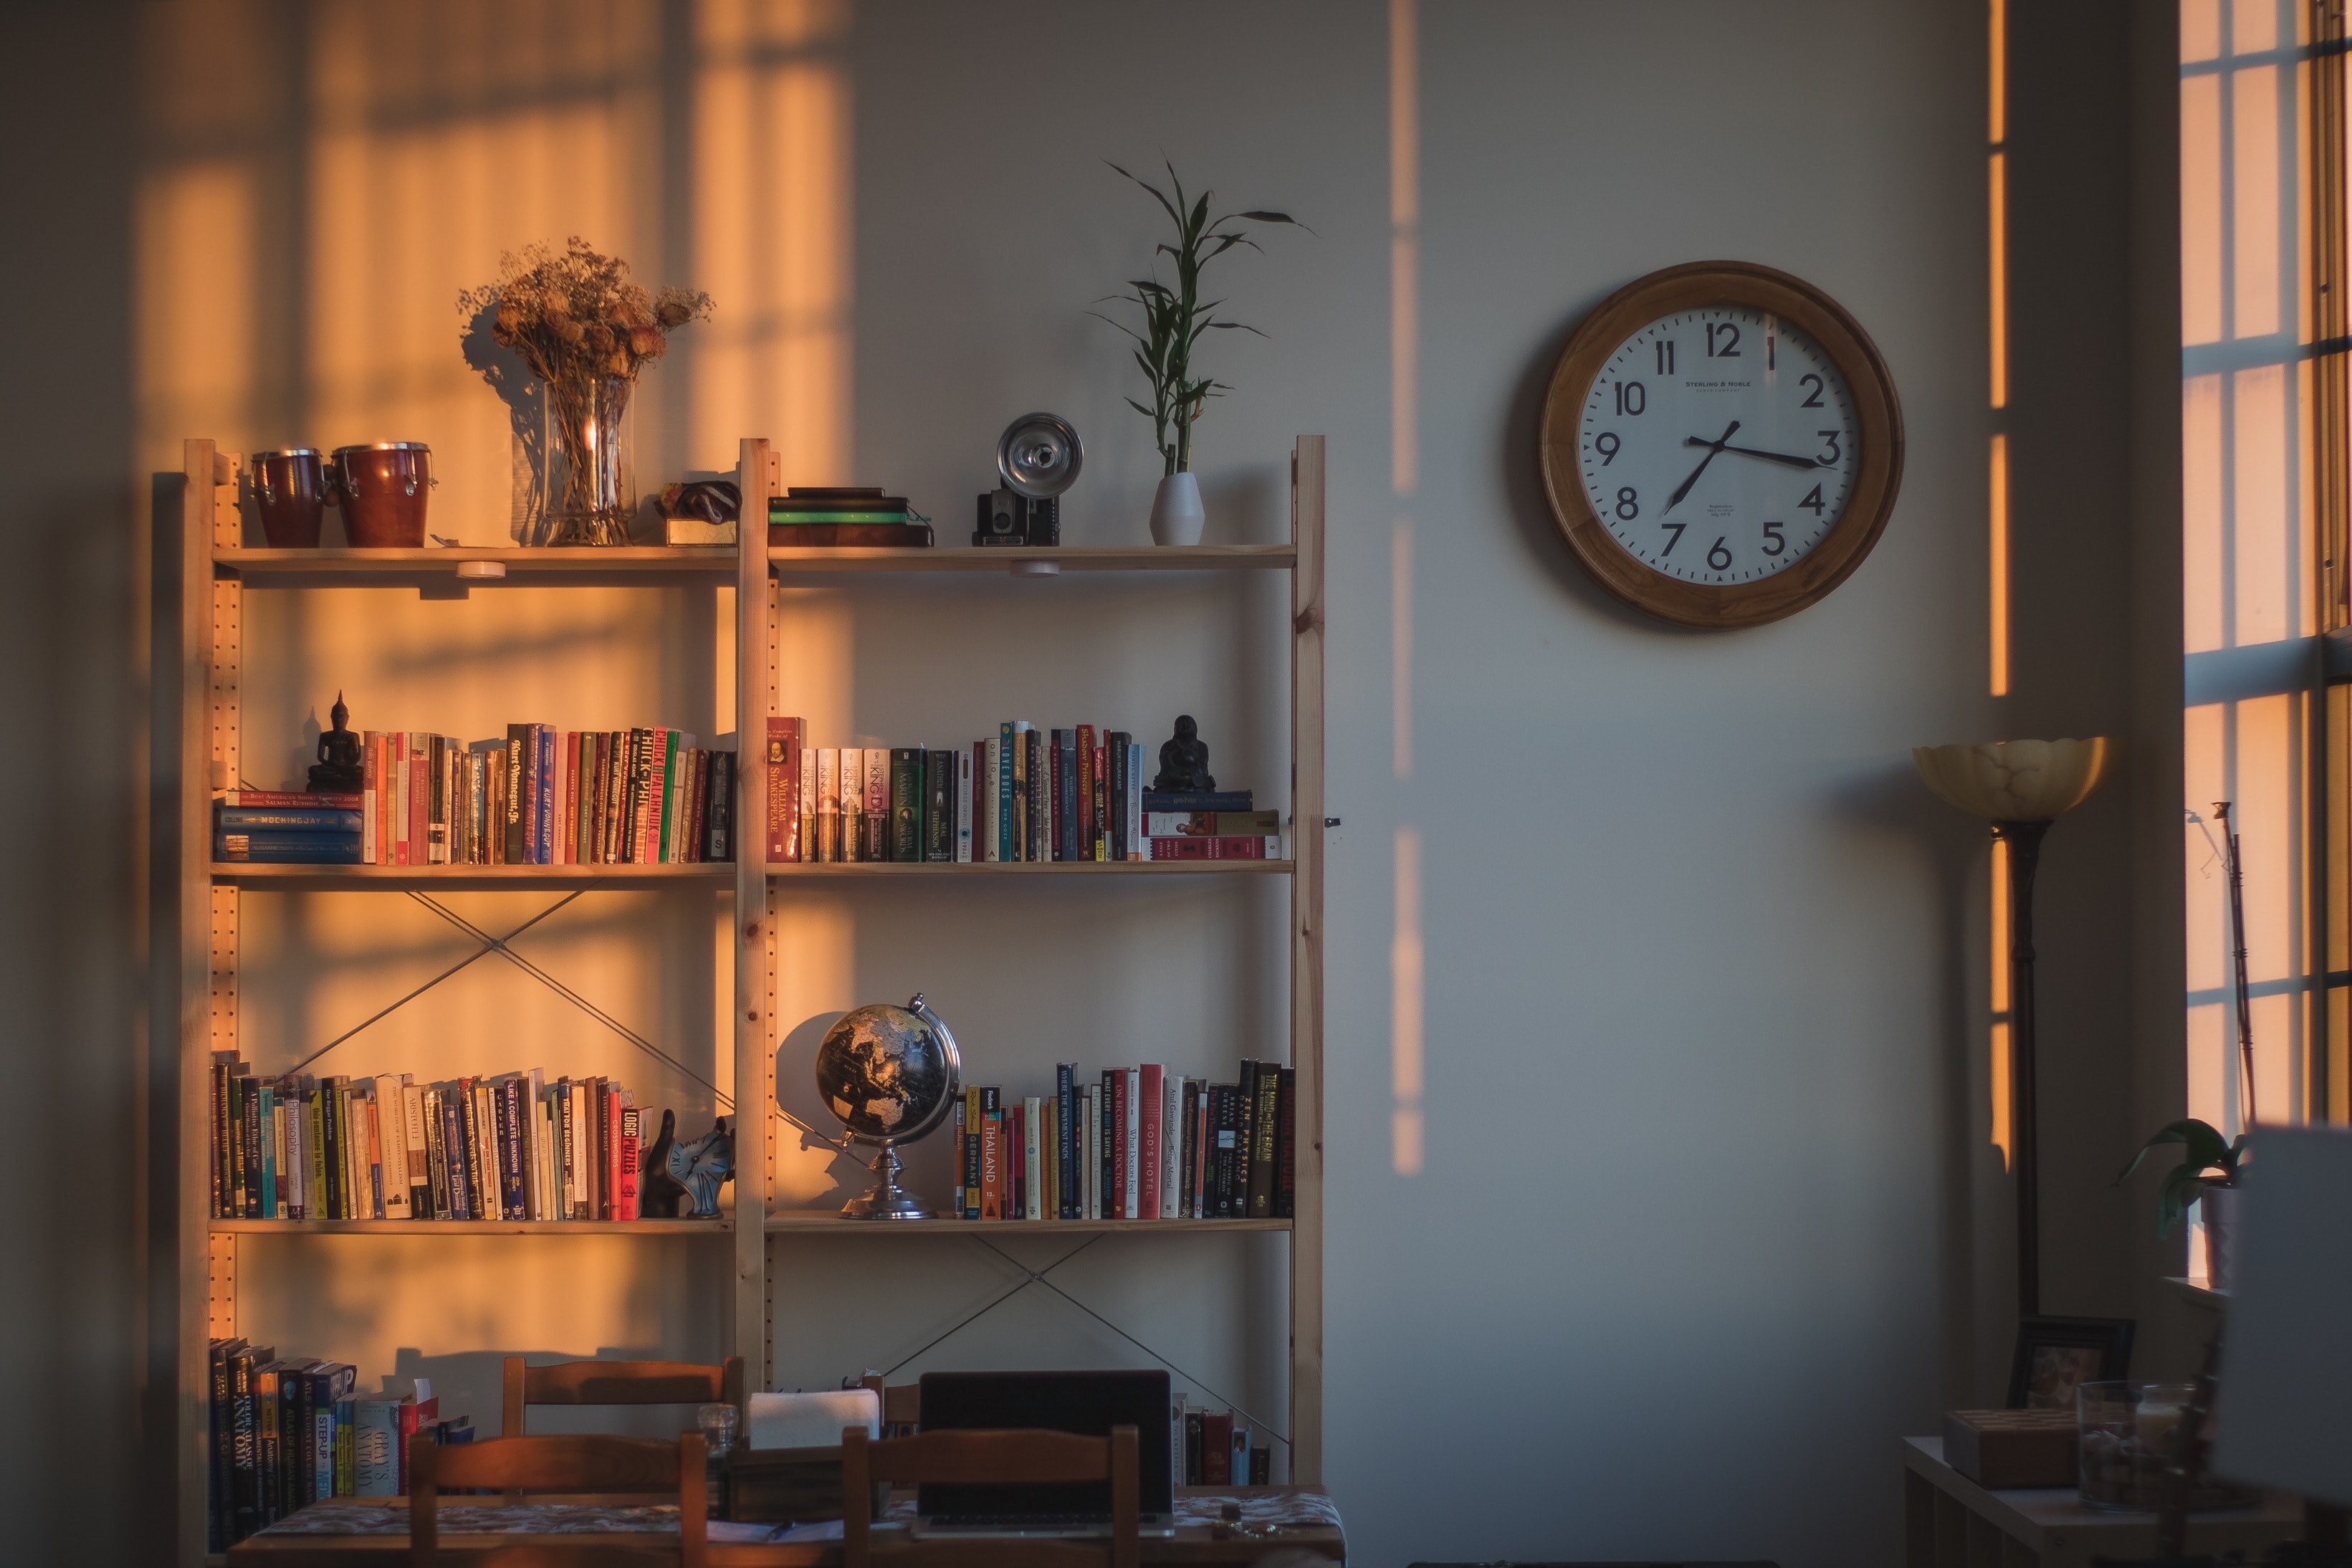 Wallpaper / bookshelf shelves wooden and house HD 4k wallpaper free download